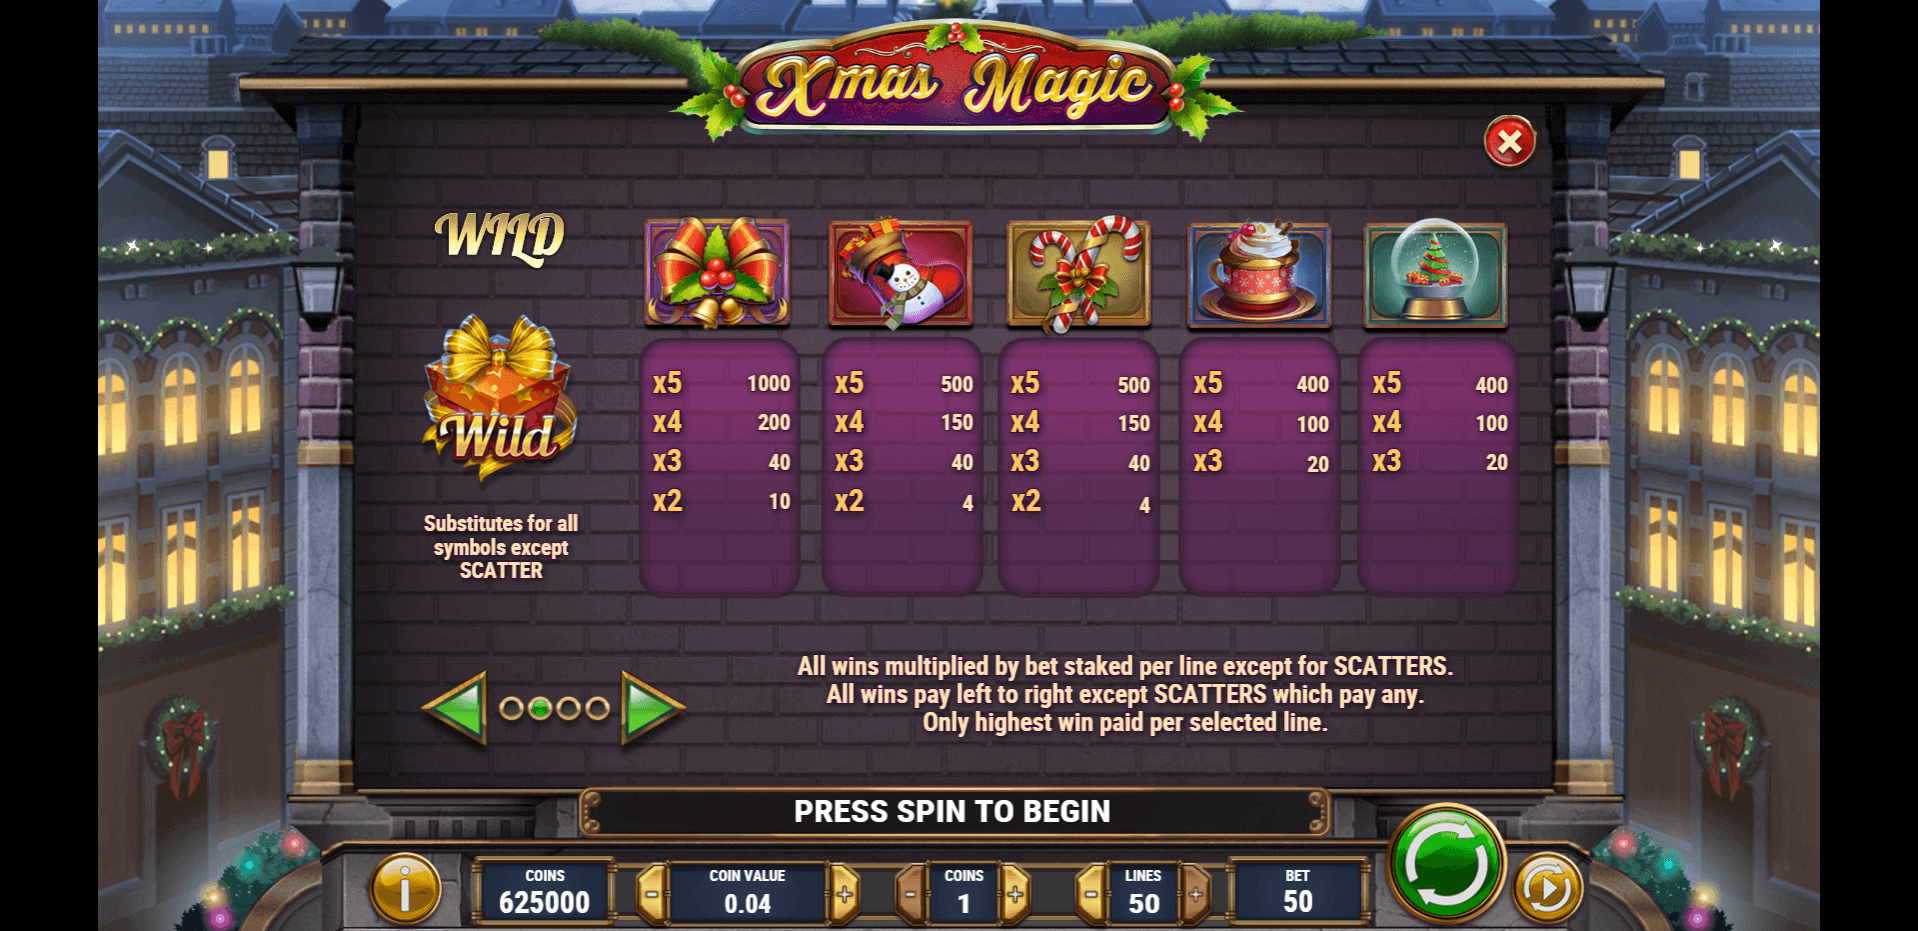 xmas magic slot machine detail image 1